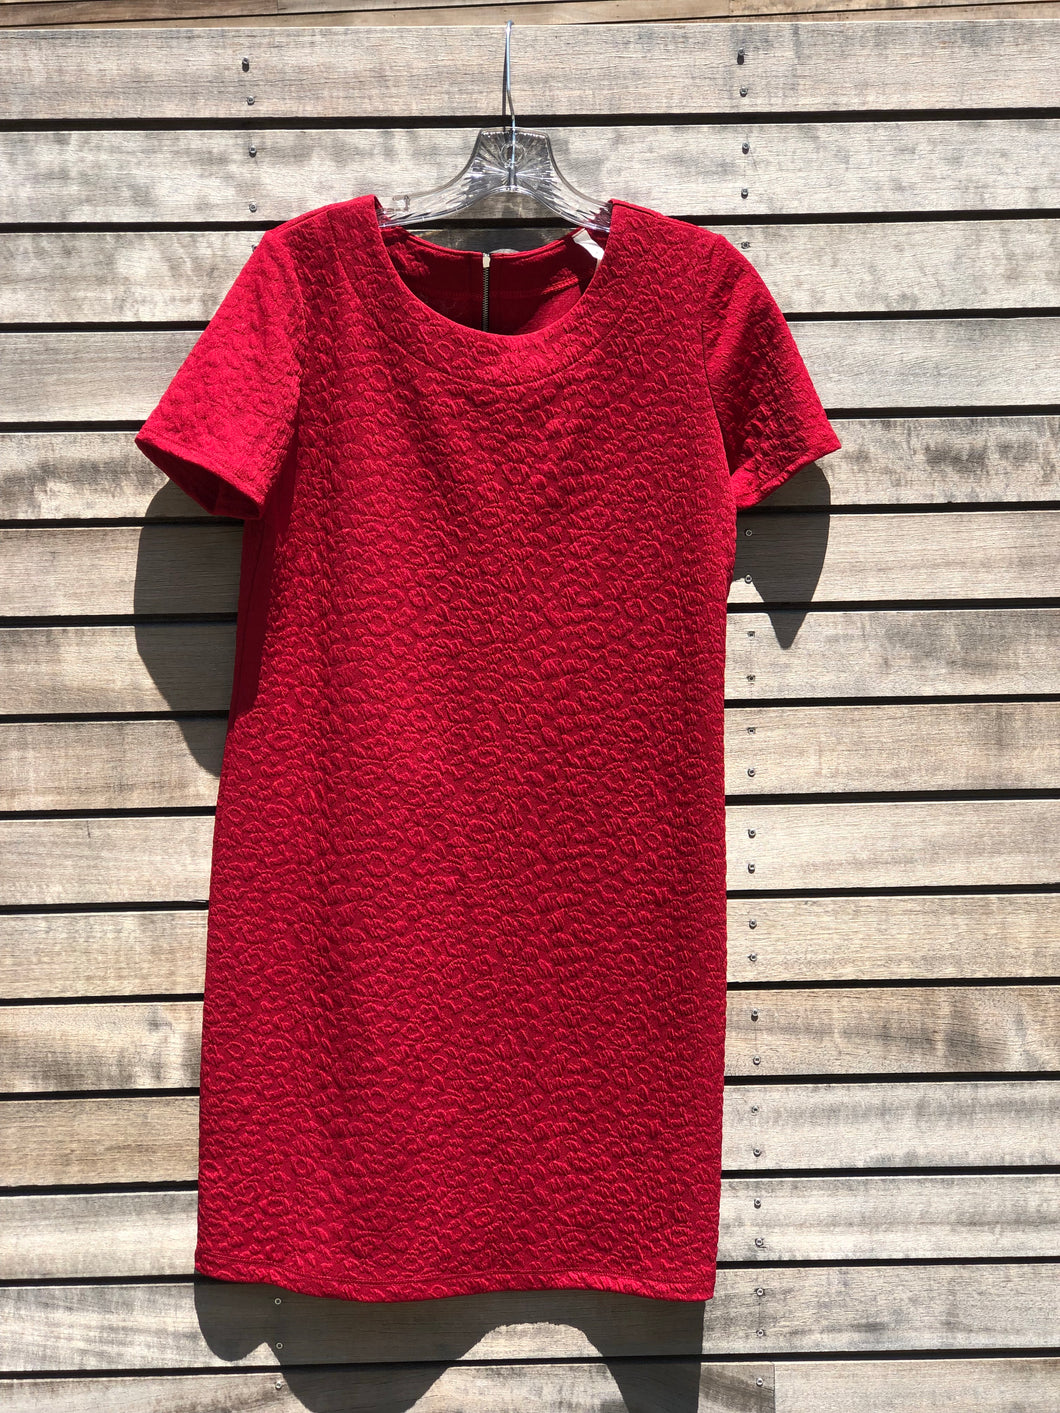 Ruby Red Dress